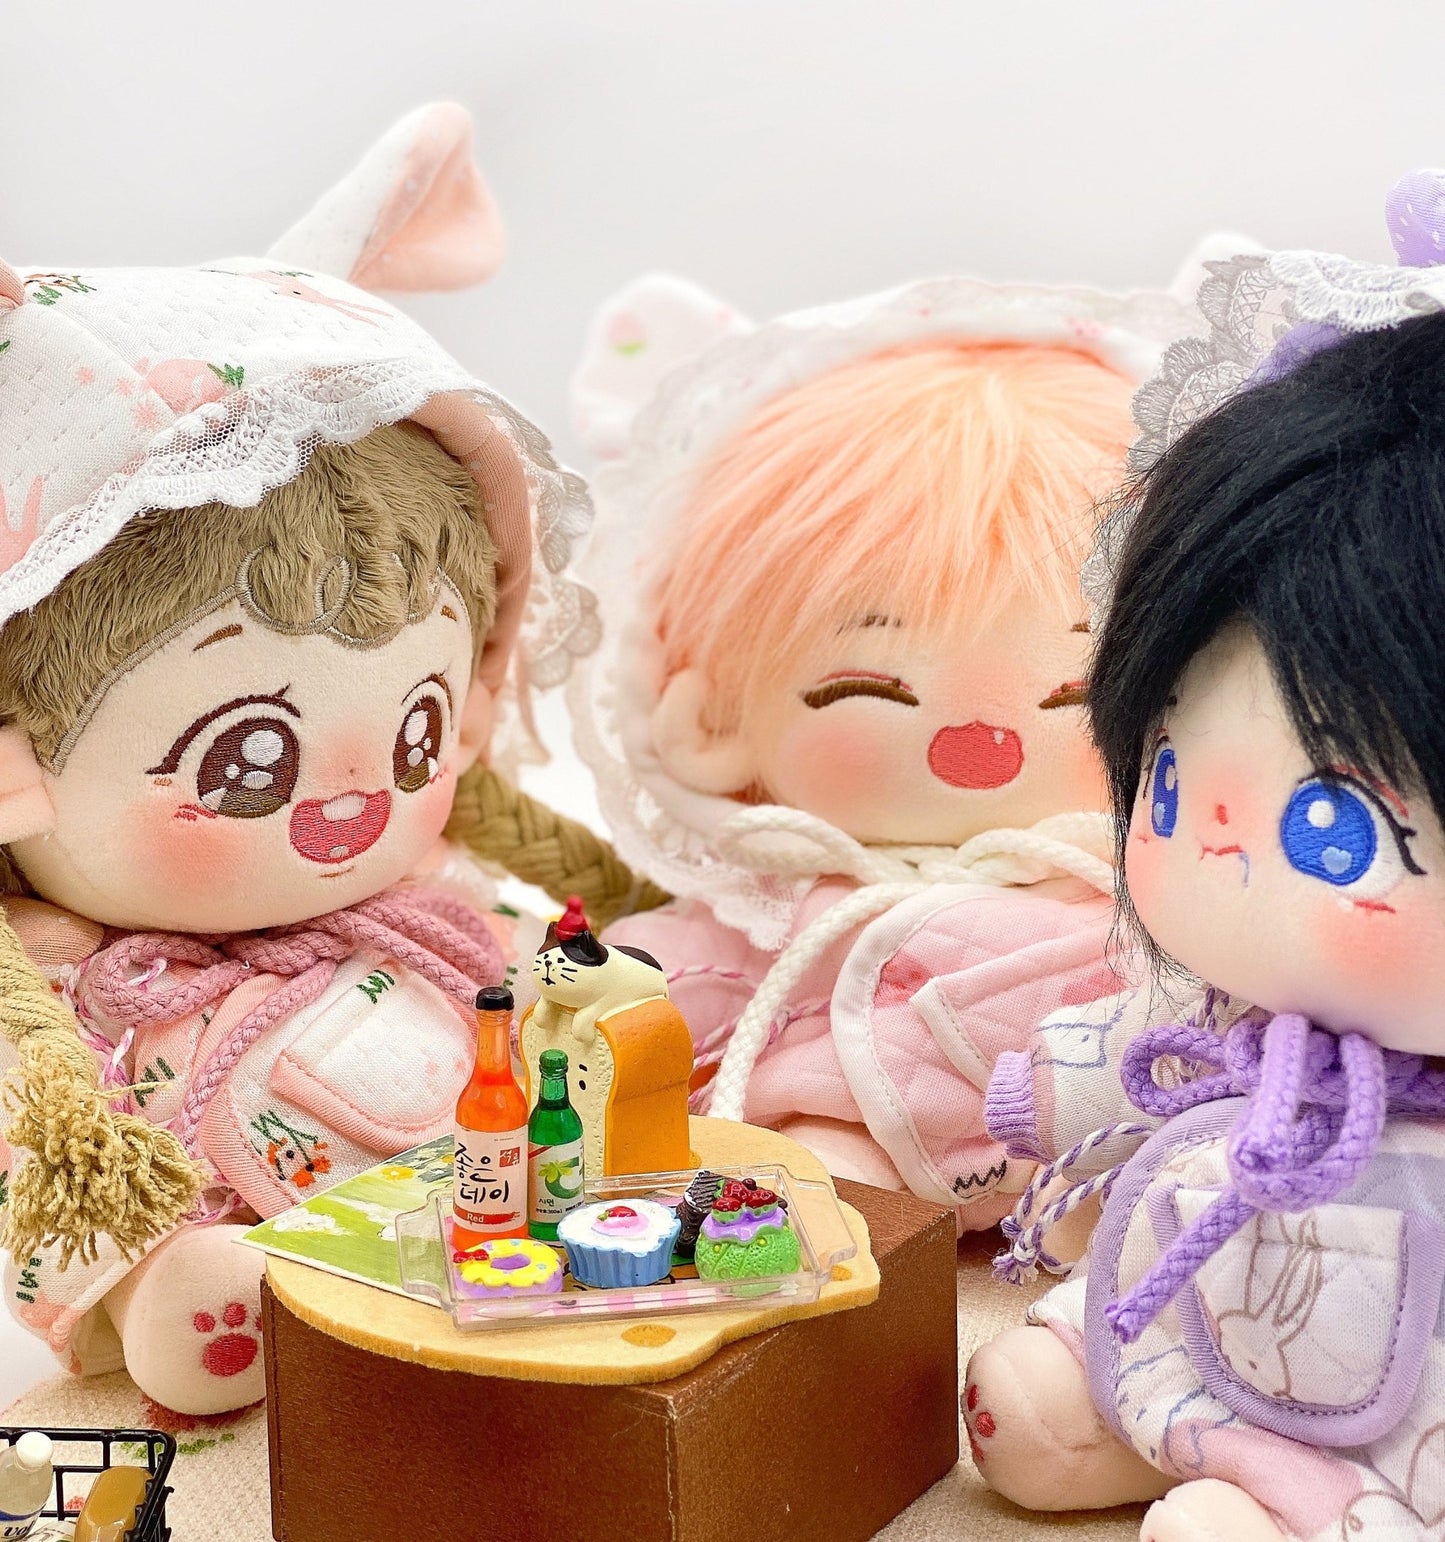 Kawaii Animal Shapes Cotton Doll Clothes 5340:426641